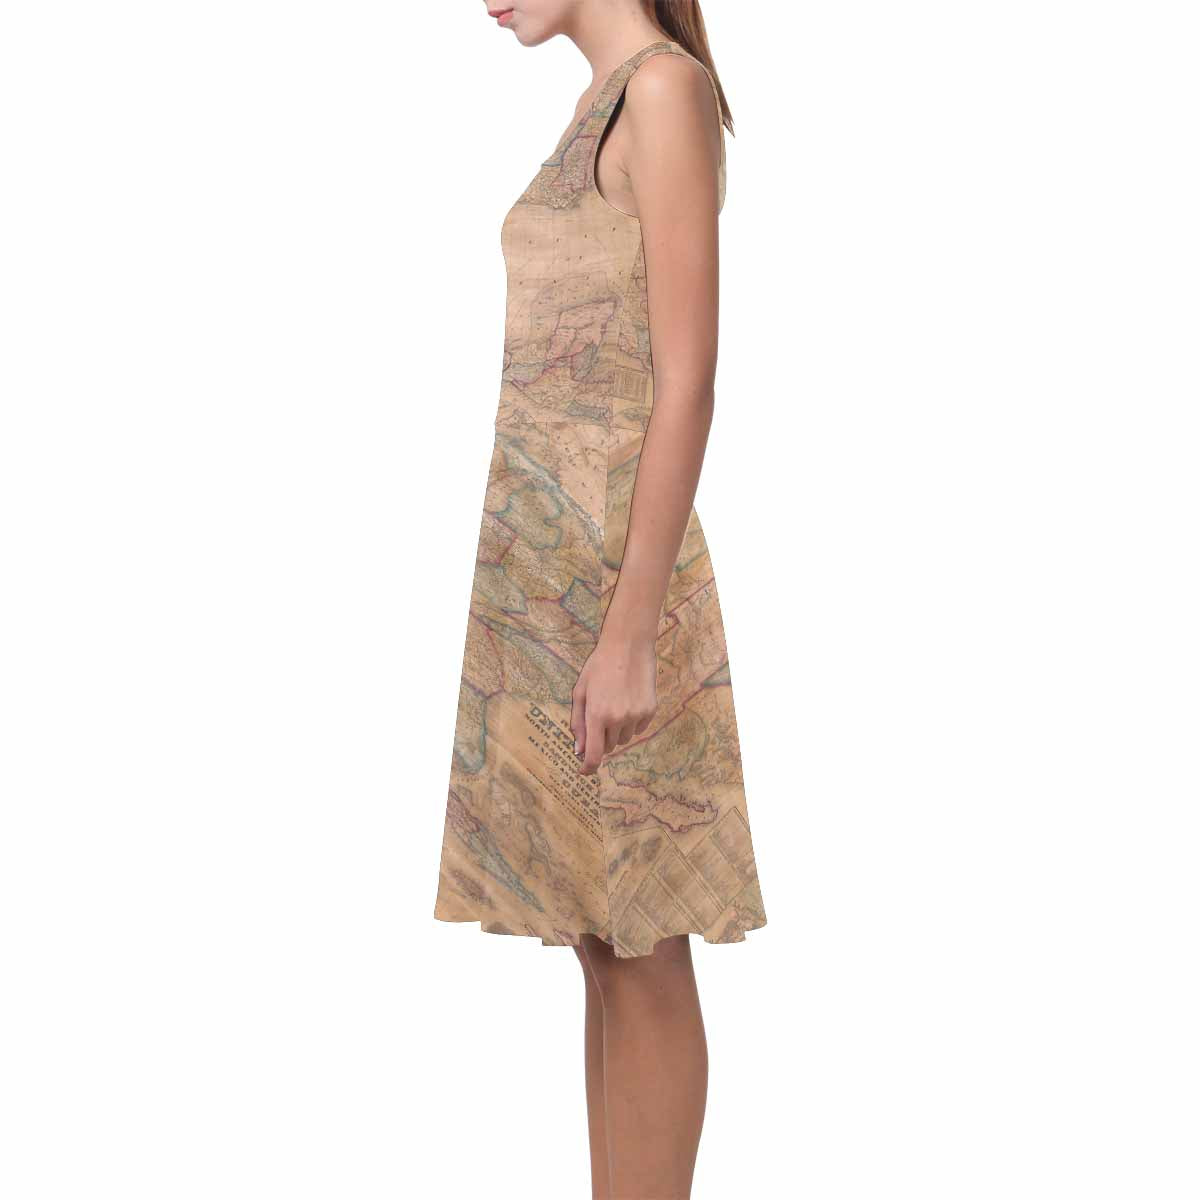 Antique Map casual summer dress, MODEL 09534, design 21